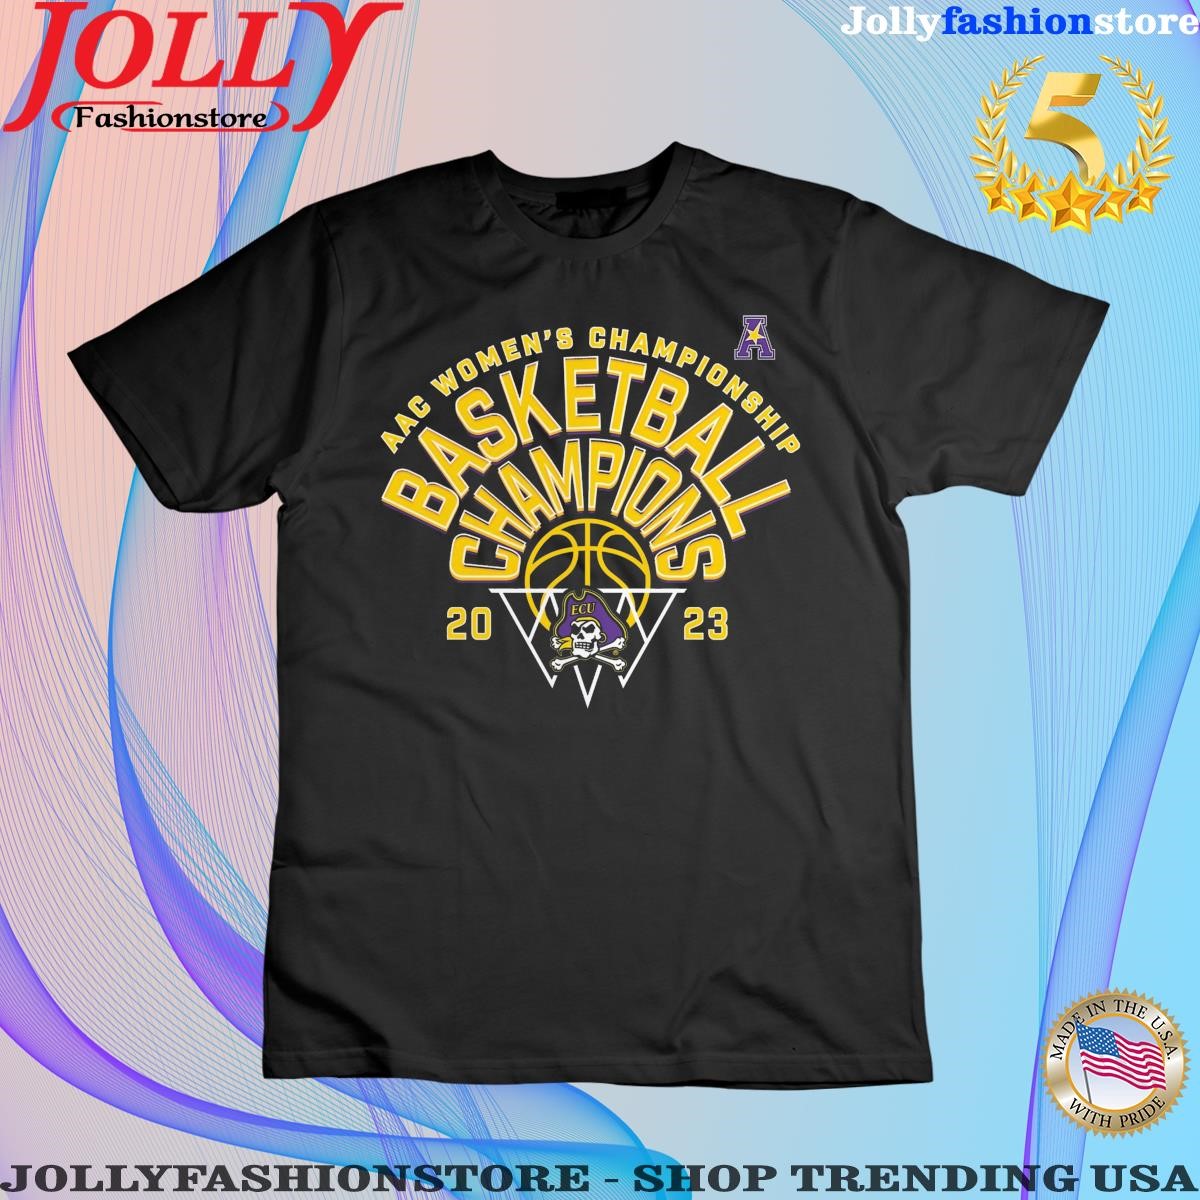 Ecu pirates women's championship basketball champions 2023 shirt women tee shirt.png